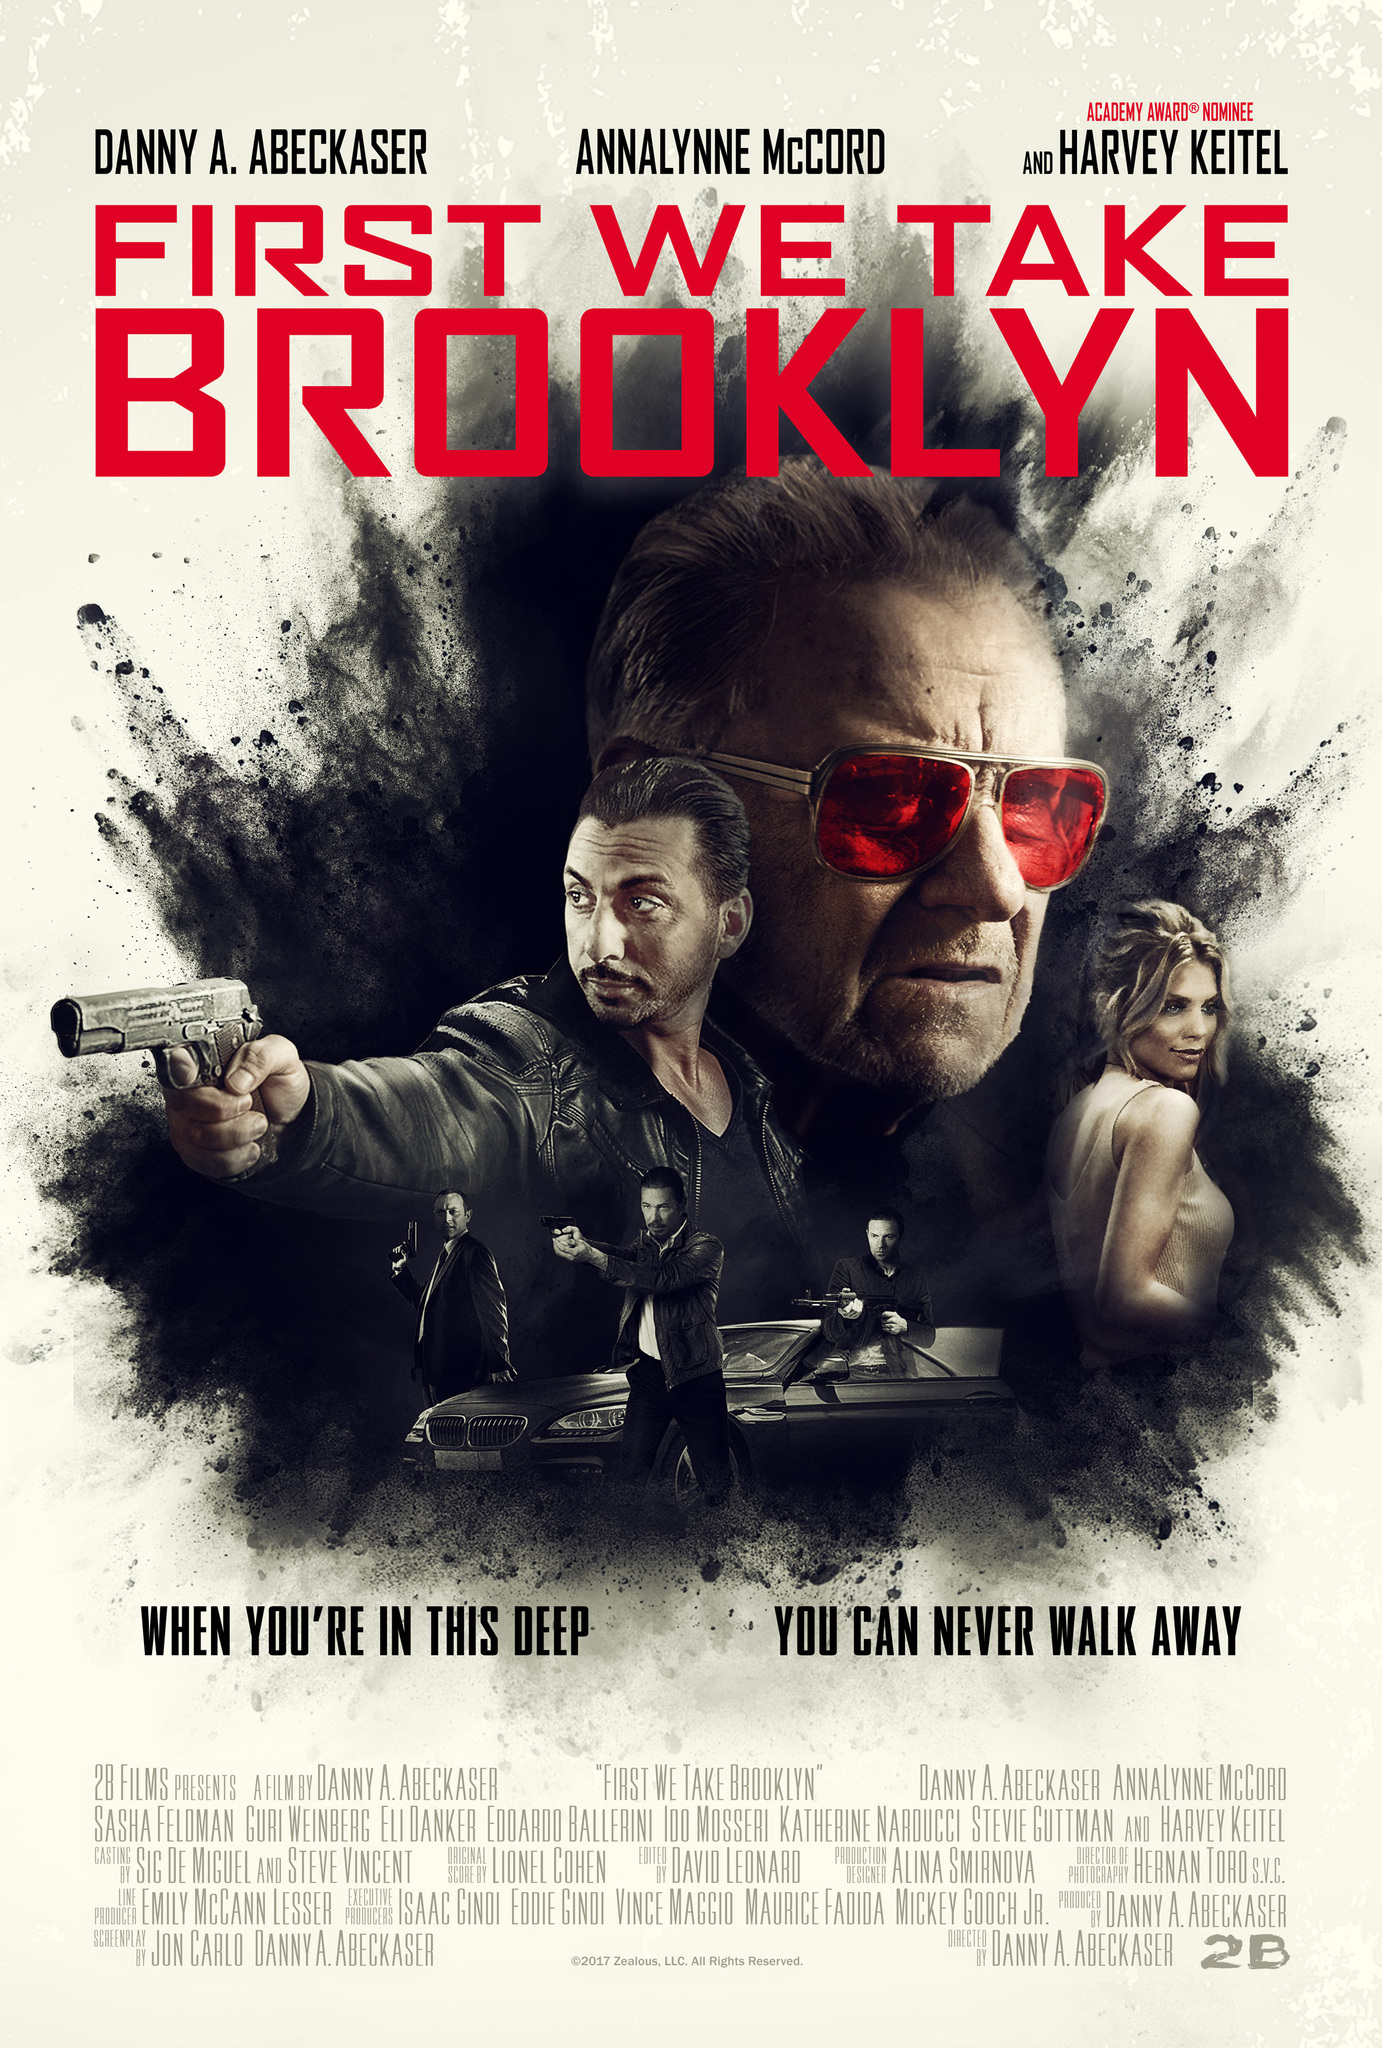 Nonton film First We Take Brooklyn layarkaca21 indoxx1 ganool online streaming terbaru